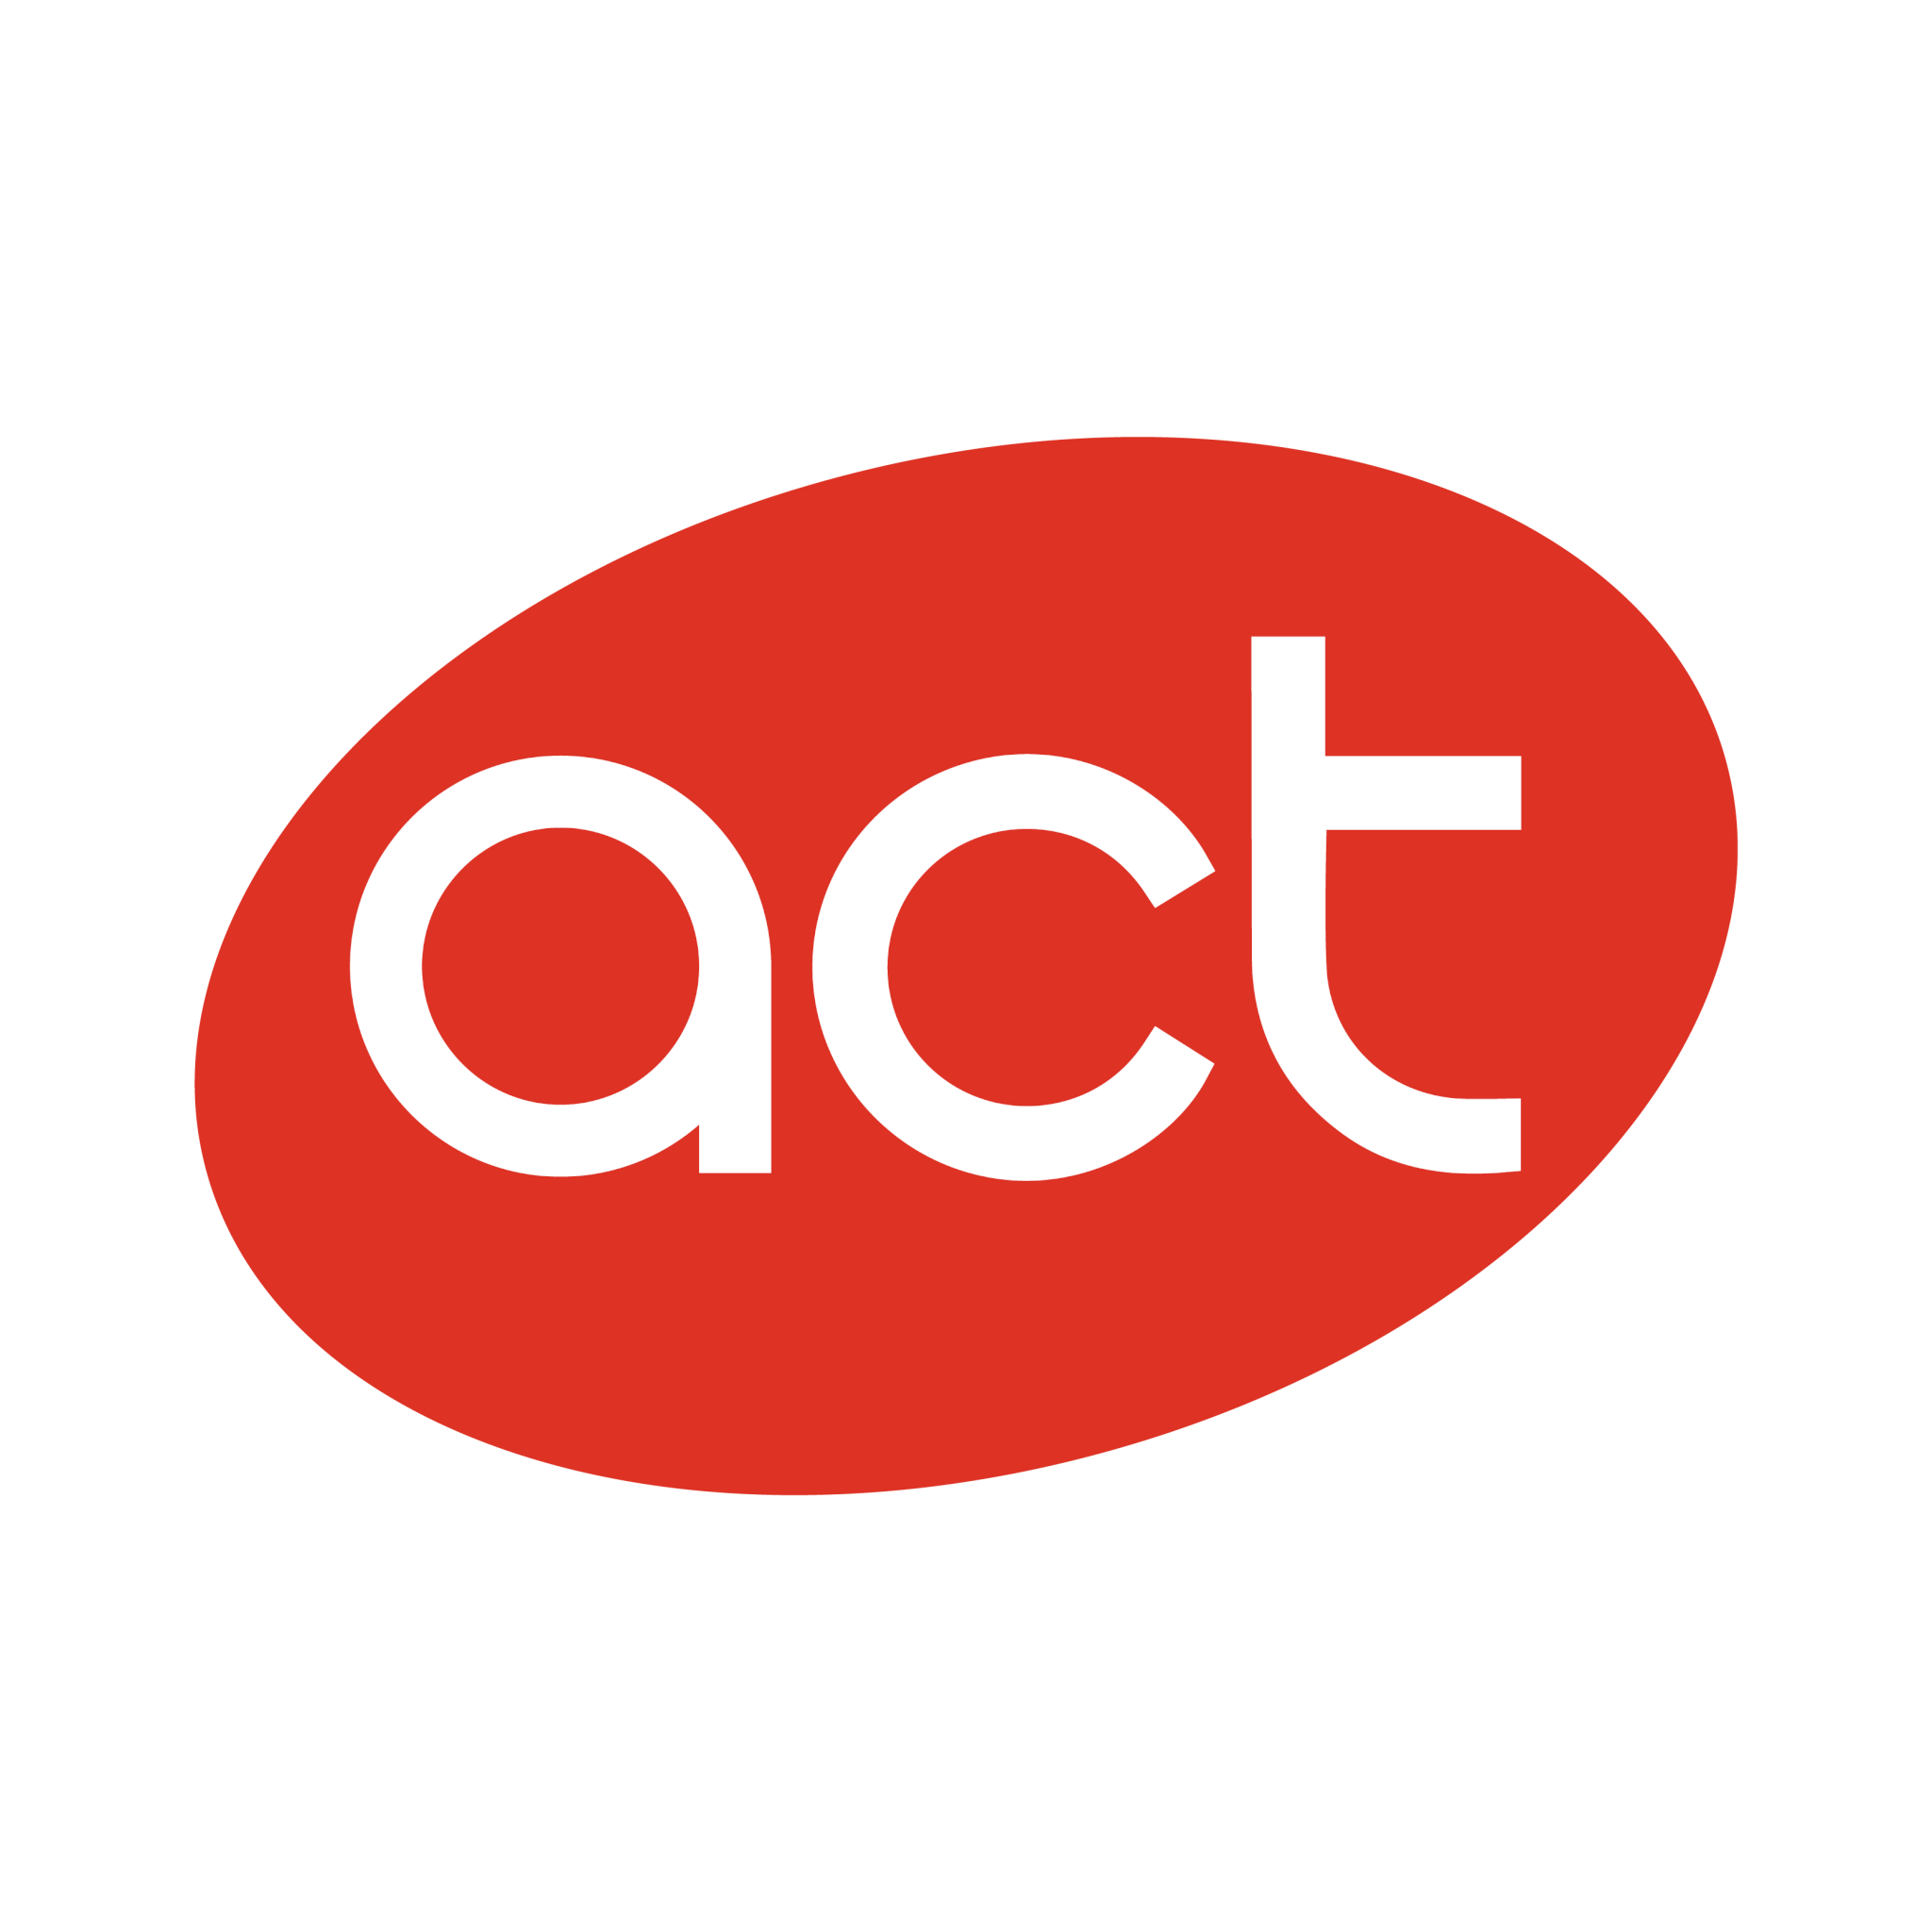 ACT Entertainment